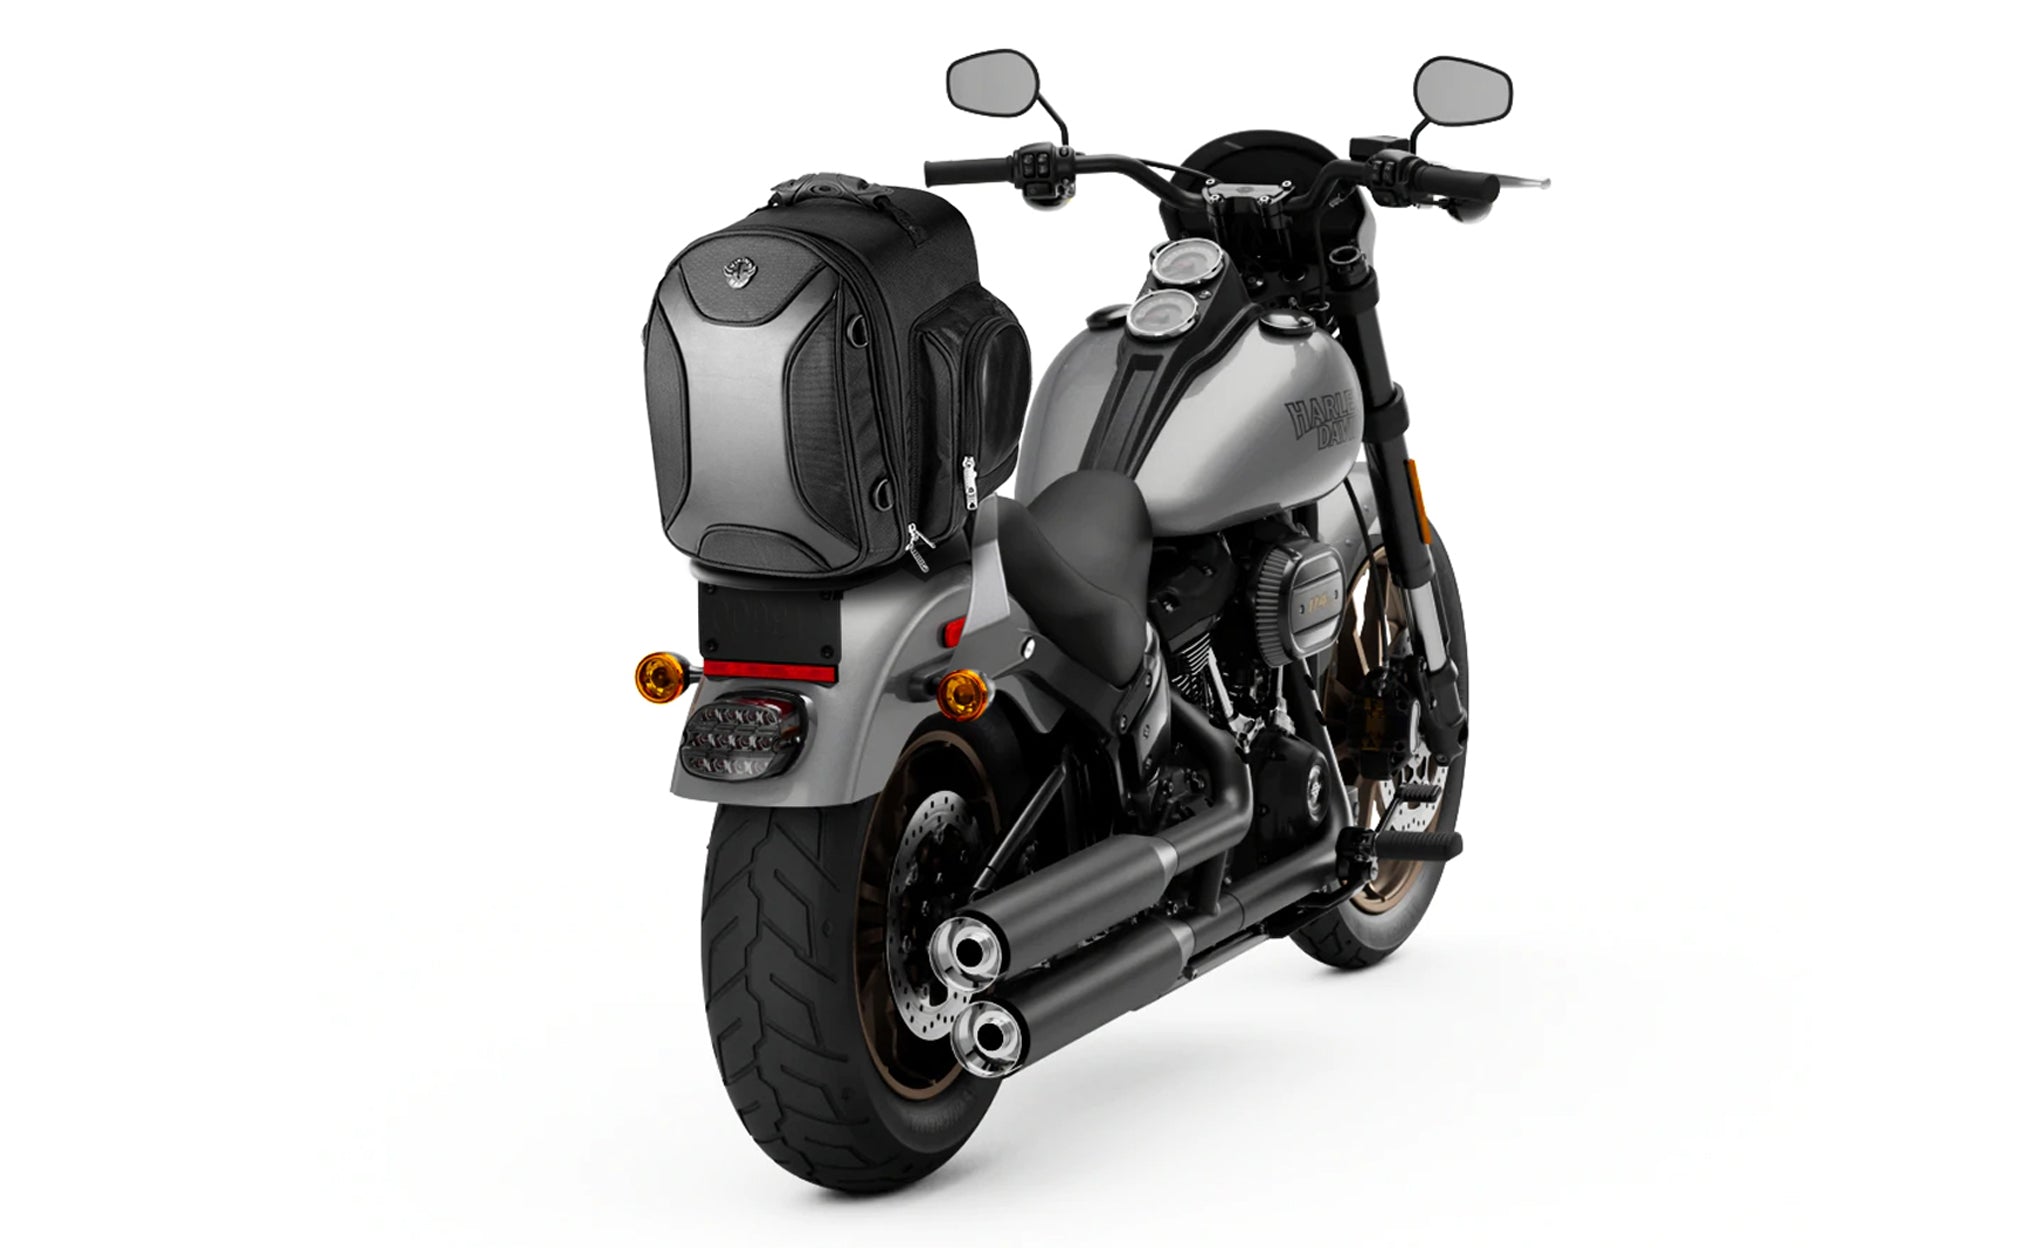 Viking Dagr Medium Honda Motorcycle Sissy Bar Bag Bag on Bike View @expand